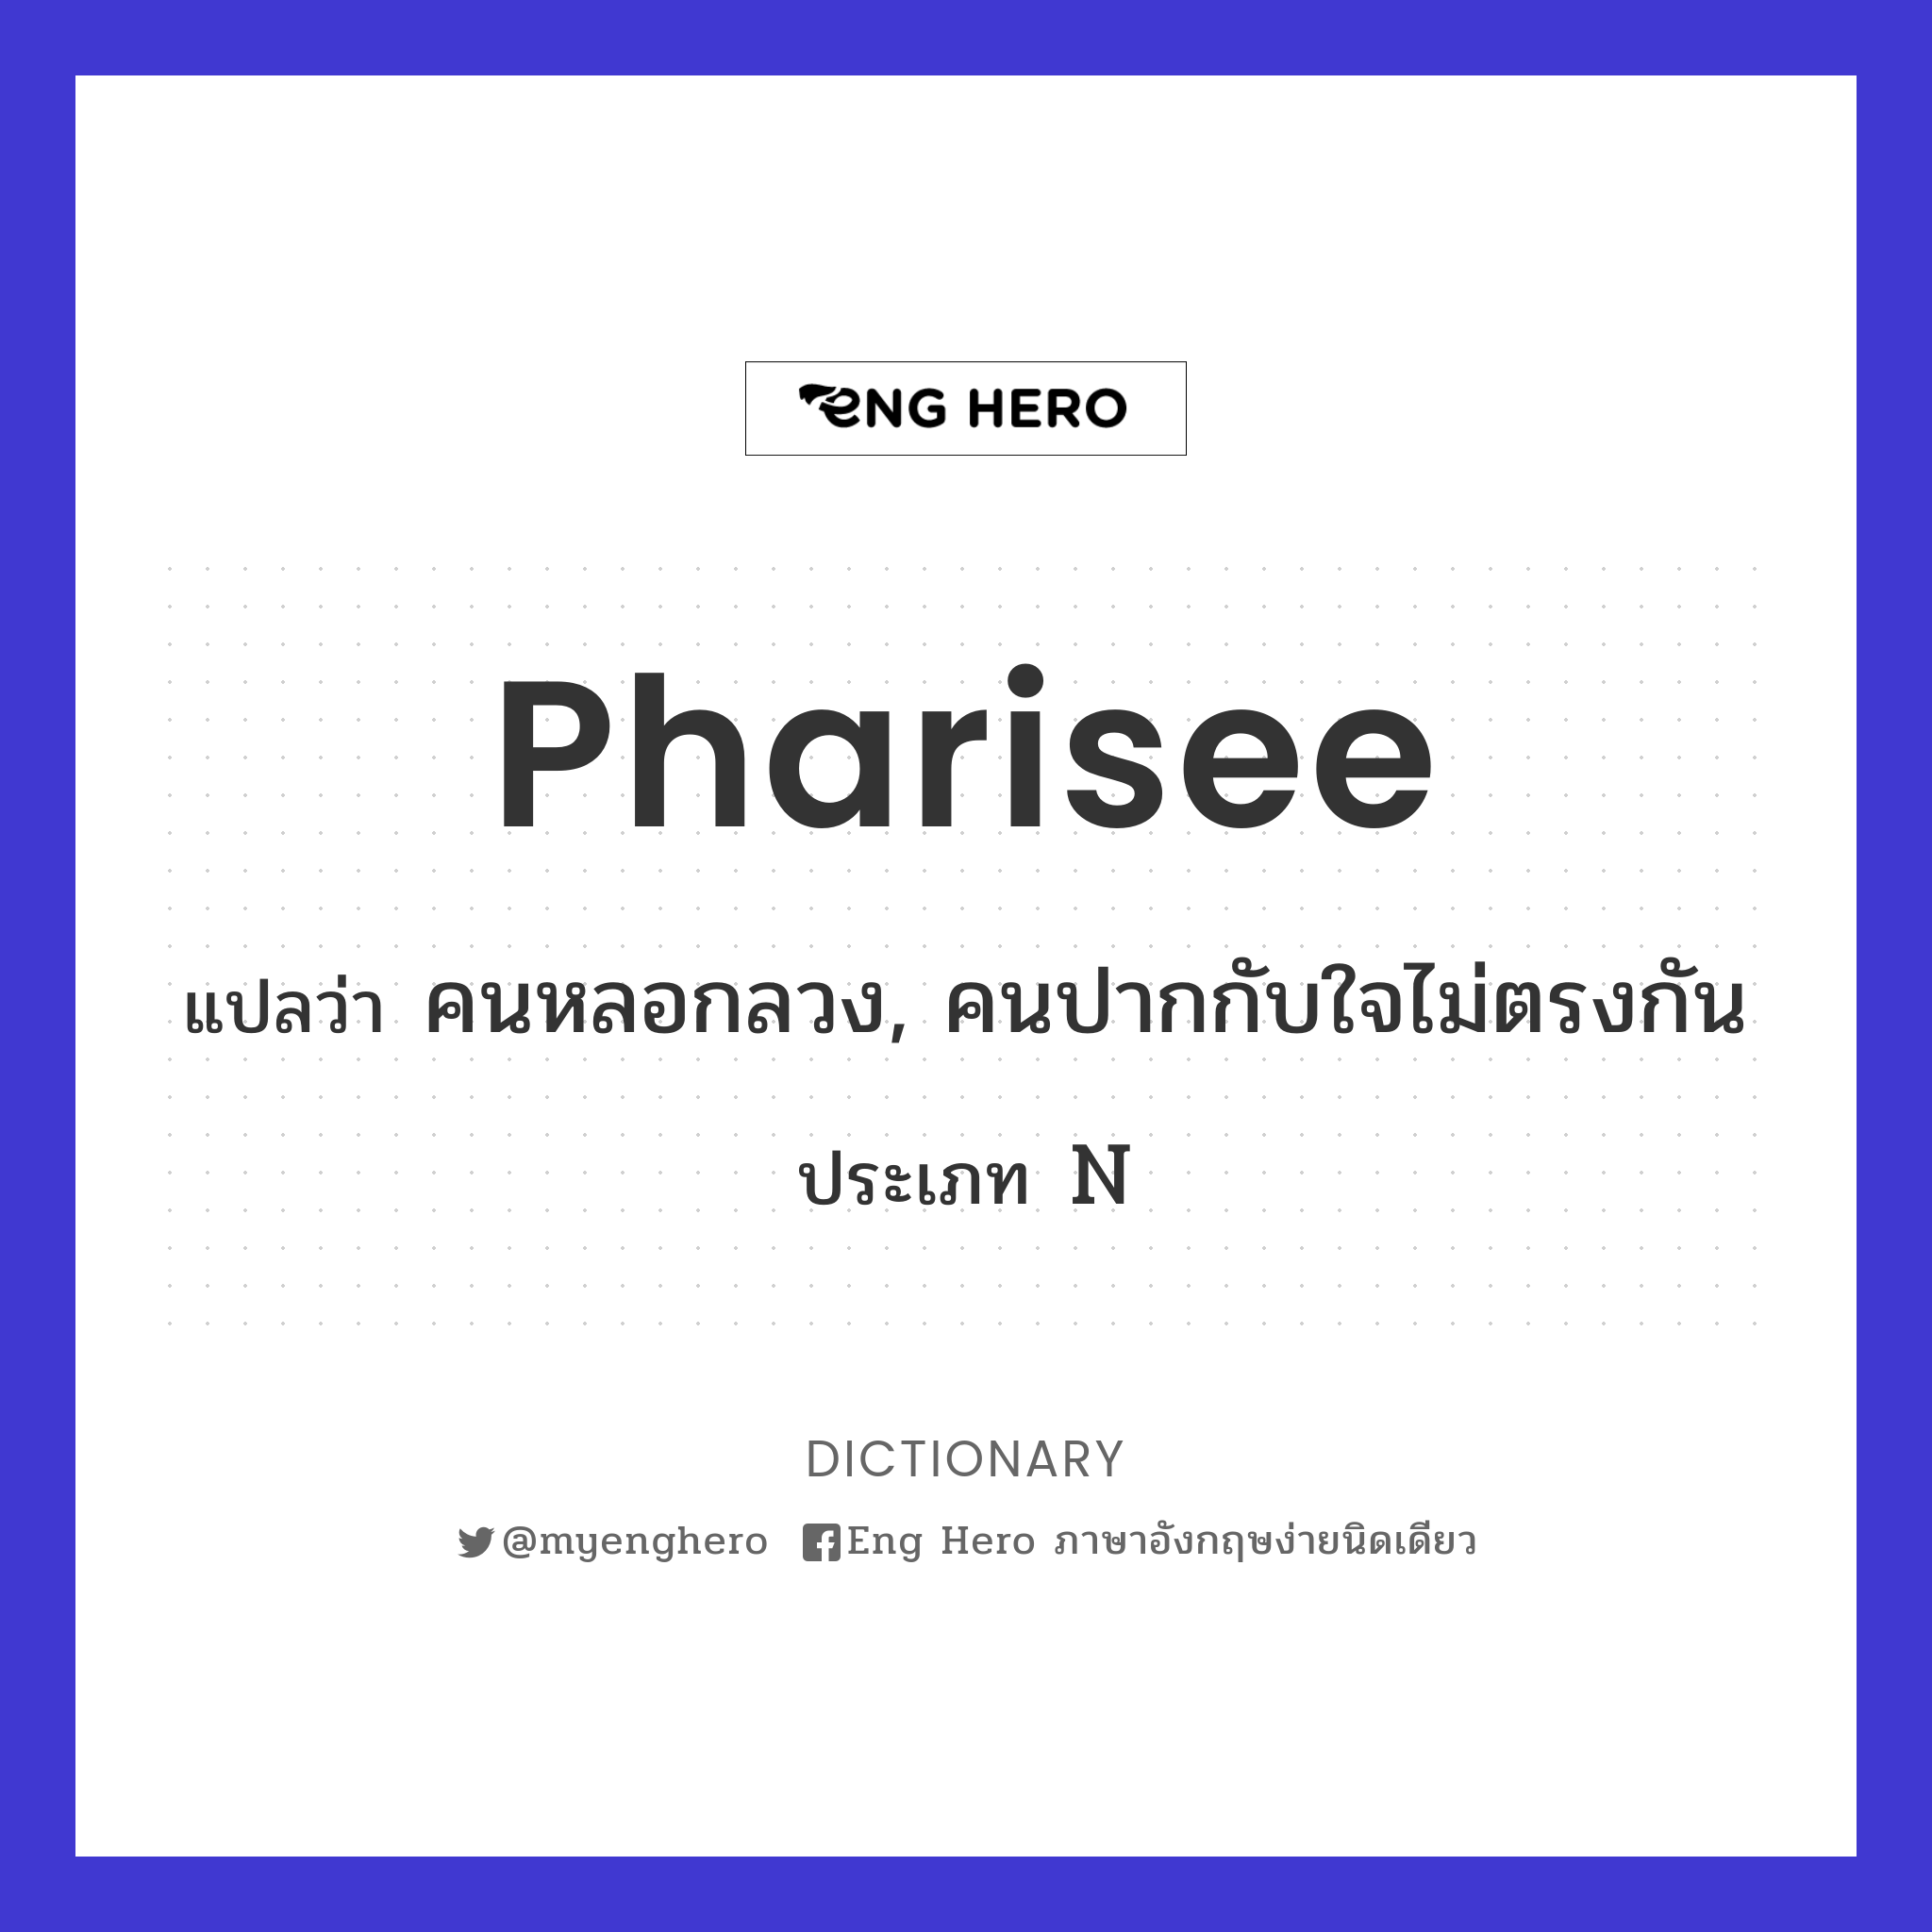 Pharisee